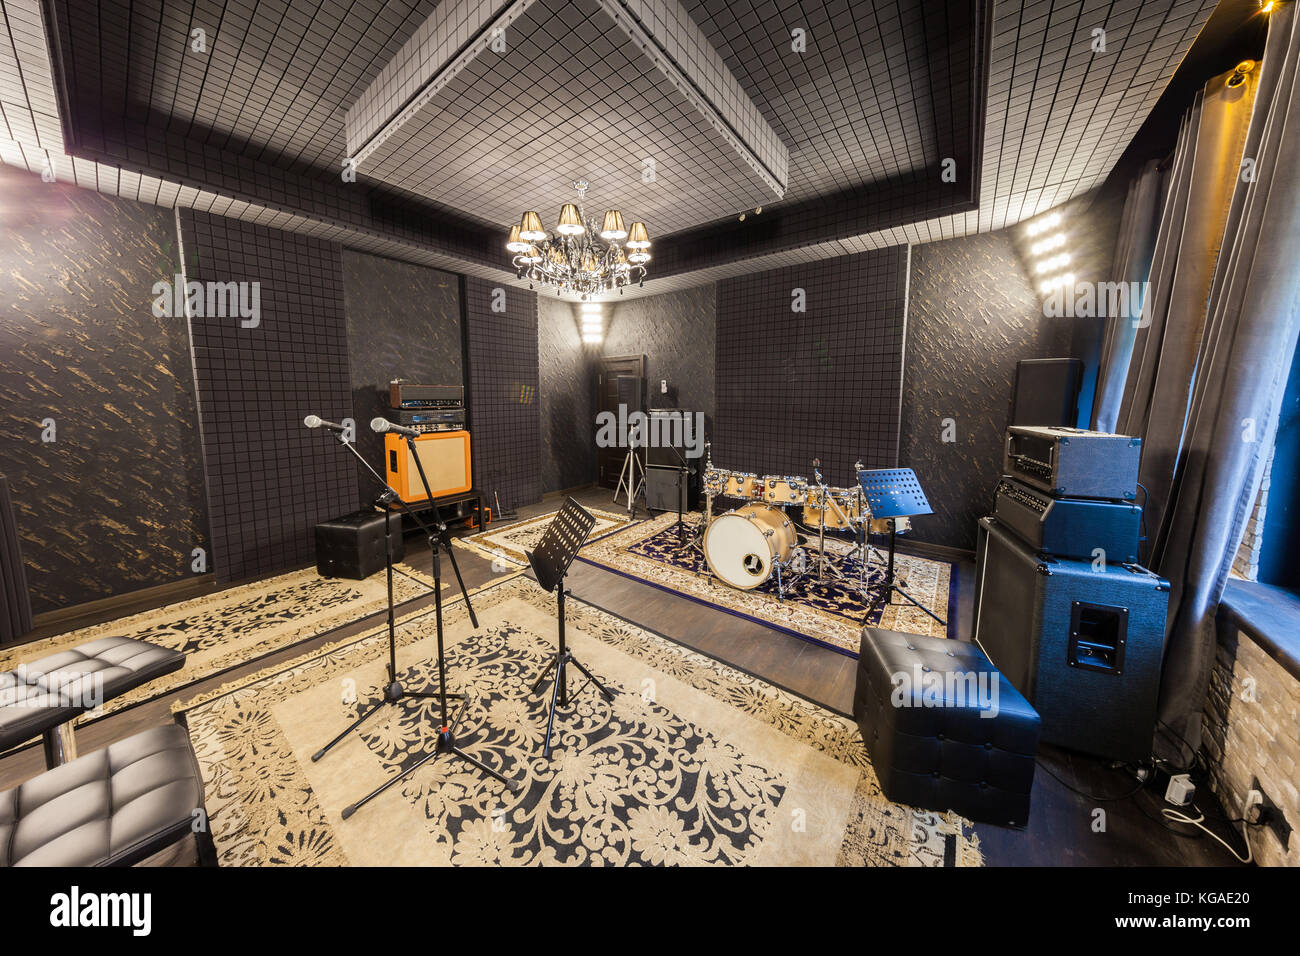 https://c8.alamy.com/comp/KGAE20/professional-recording-studio-with-musical-instruments-KGAE20.jpg